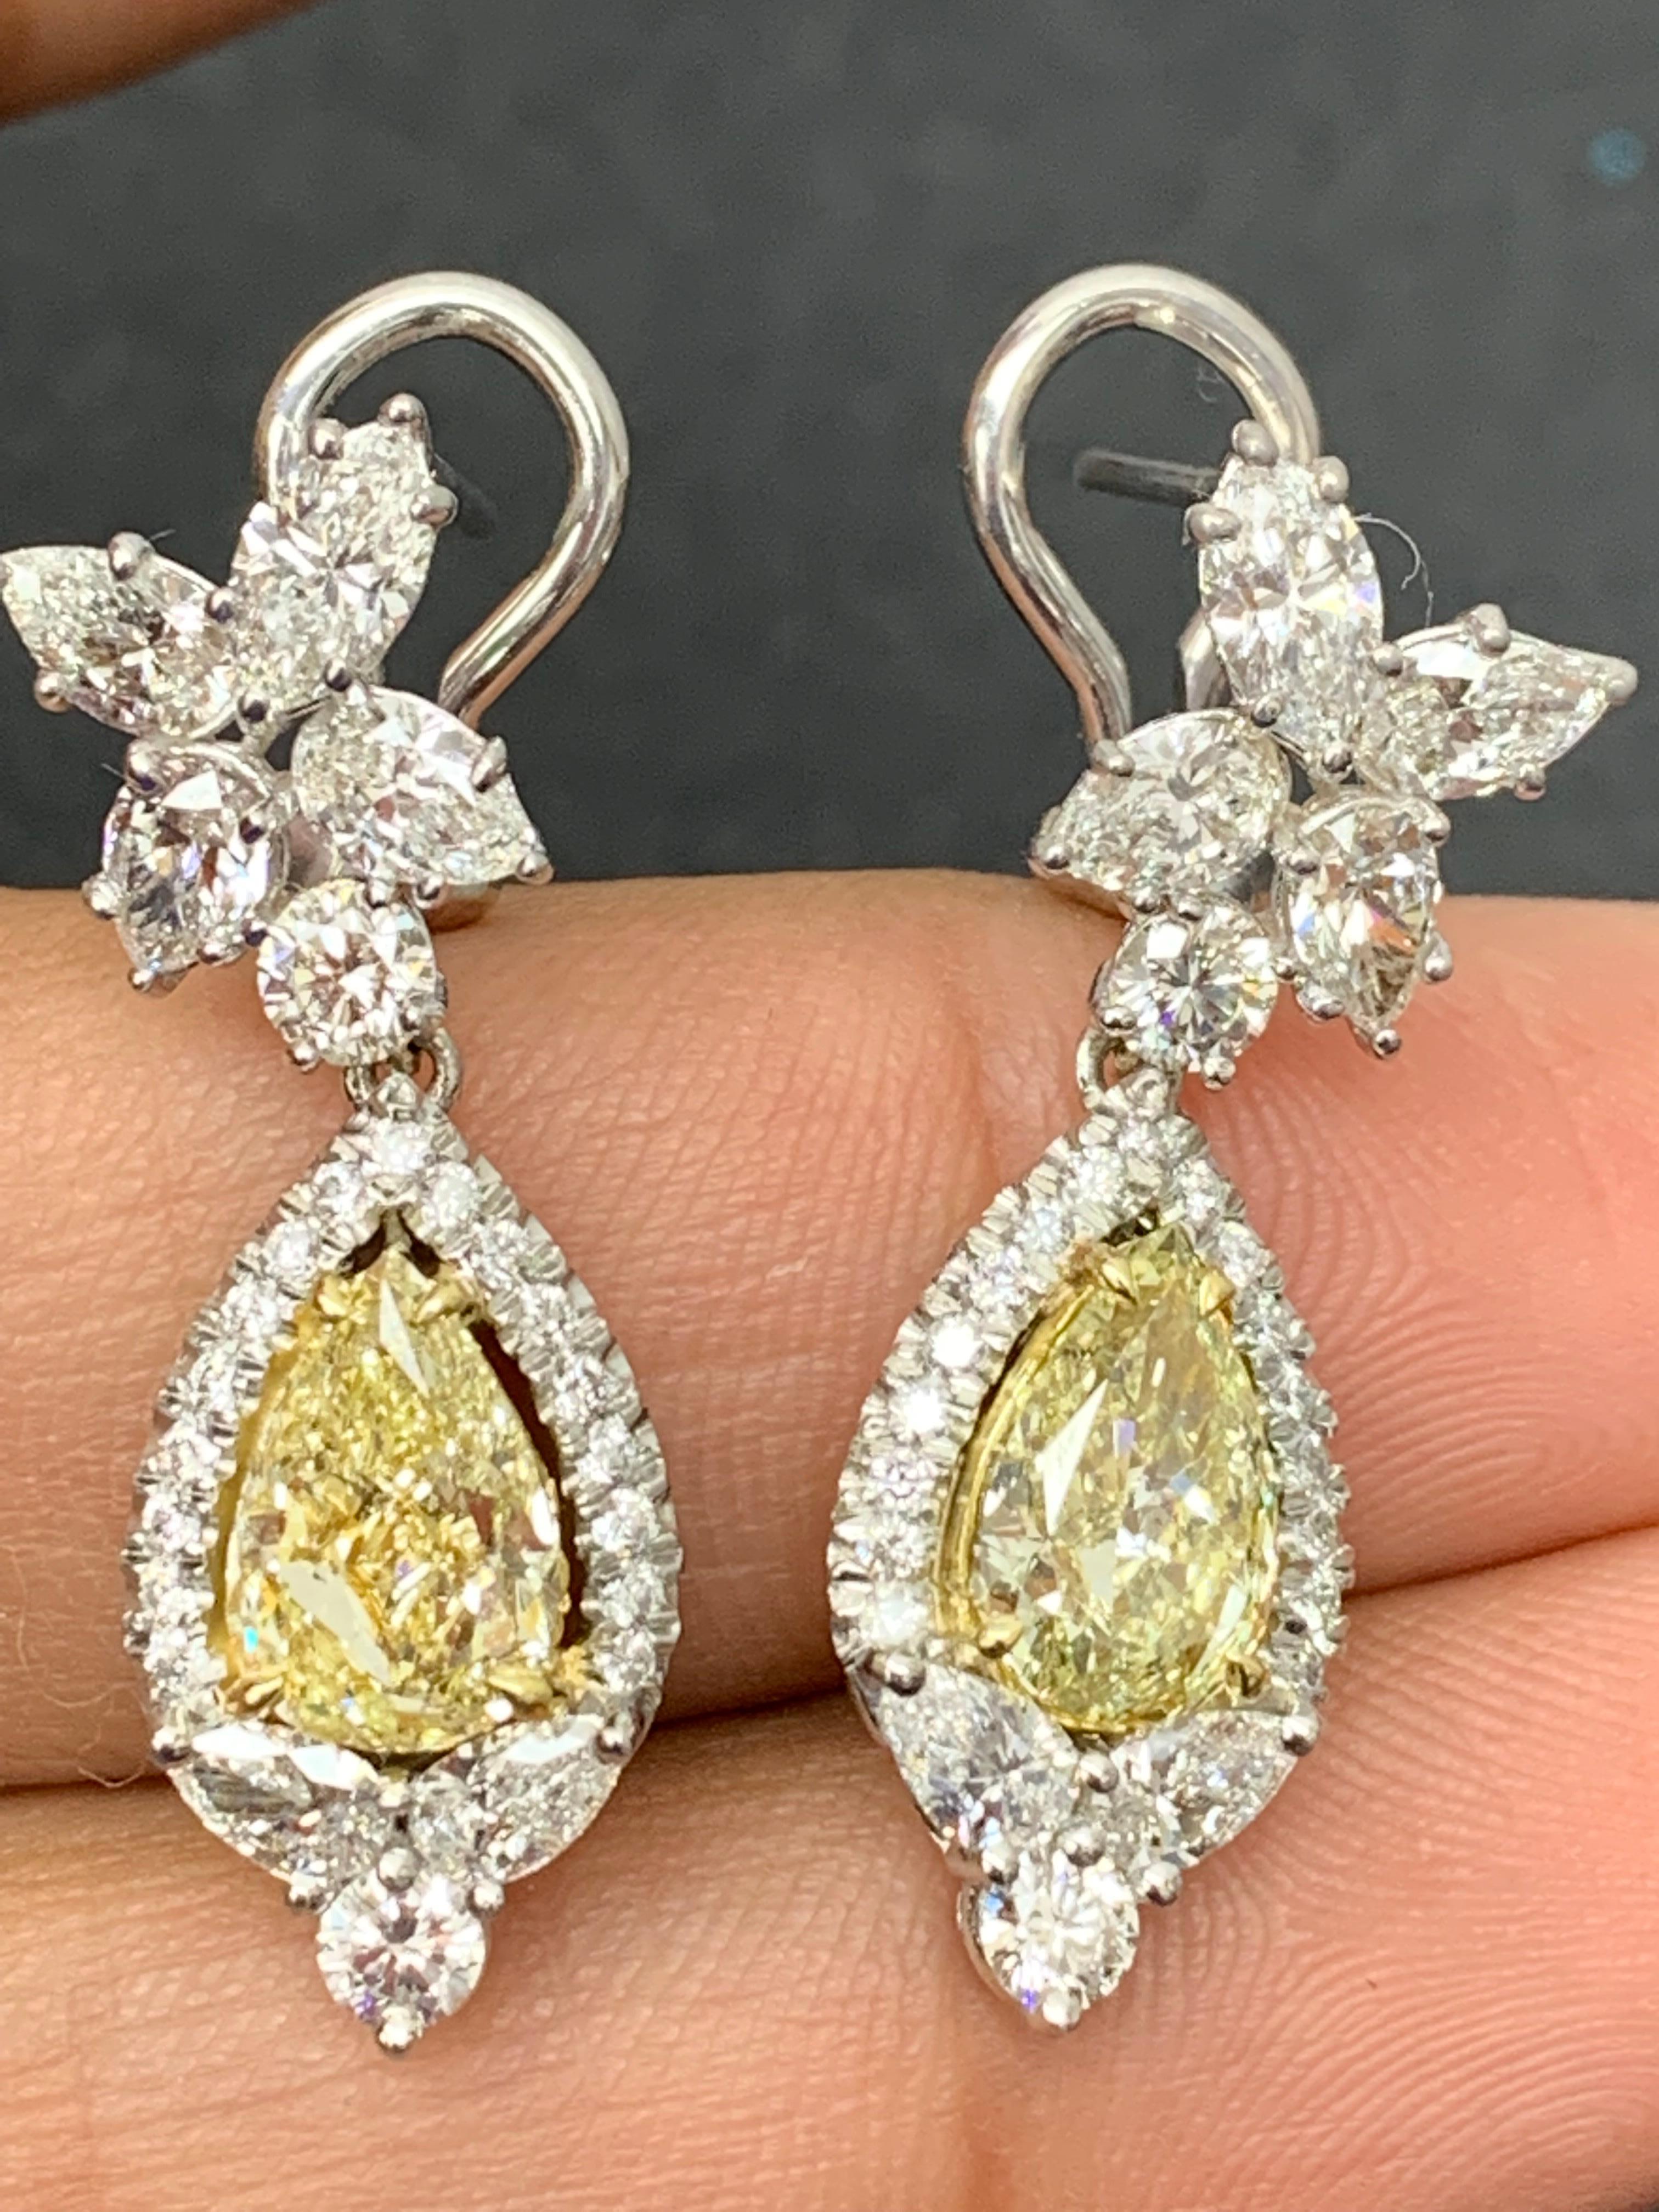 3.79 Carat Fancy Yellow Diamond and Diamond Drop Earrings in 18K White Gold For Sale 3